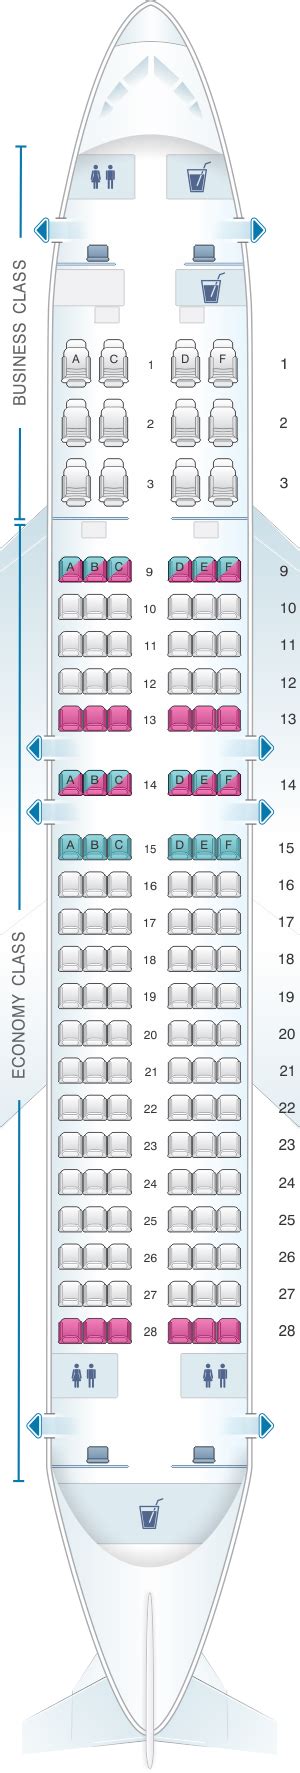 Seat Map Qatar Airways Airbus A320 200 144pax Seatmaestro